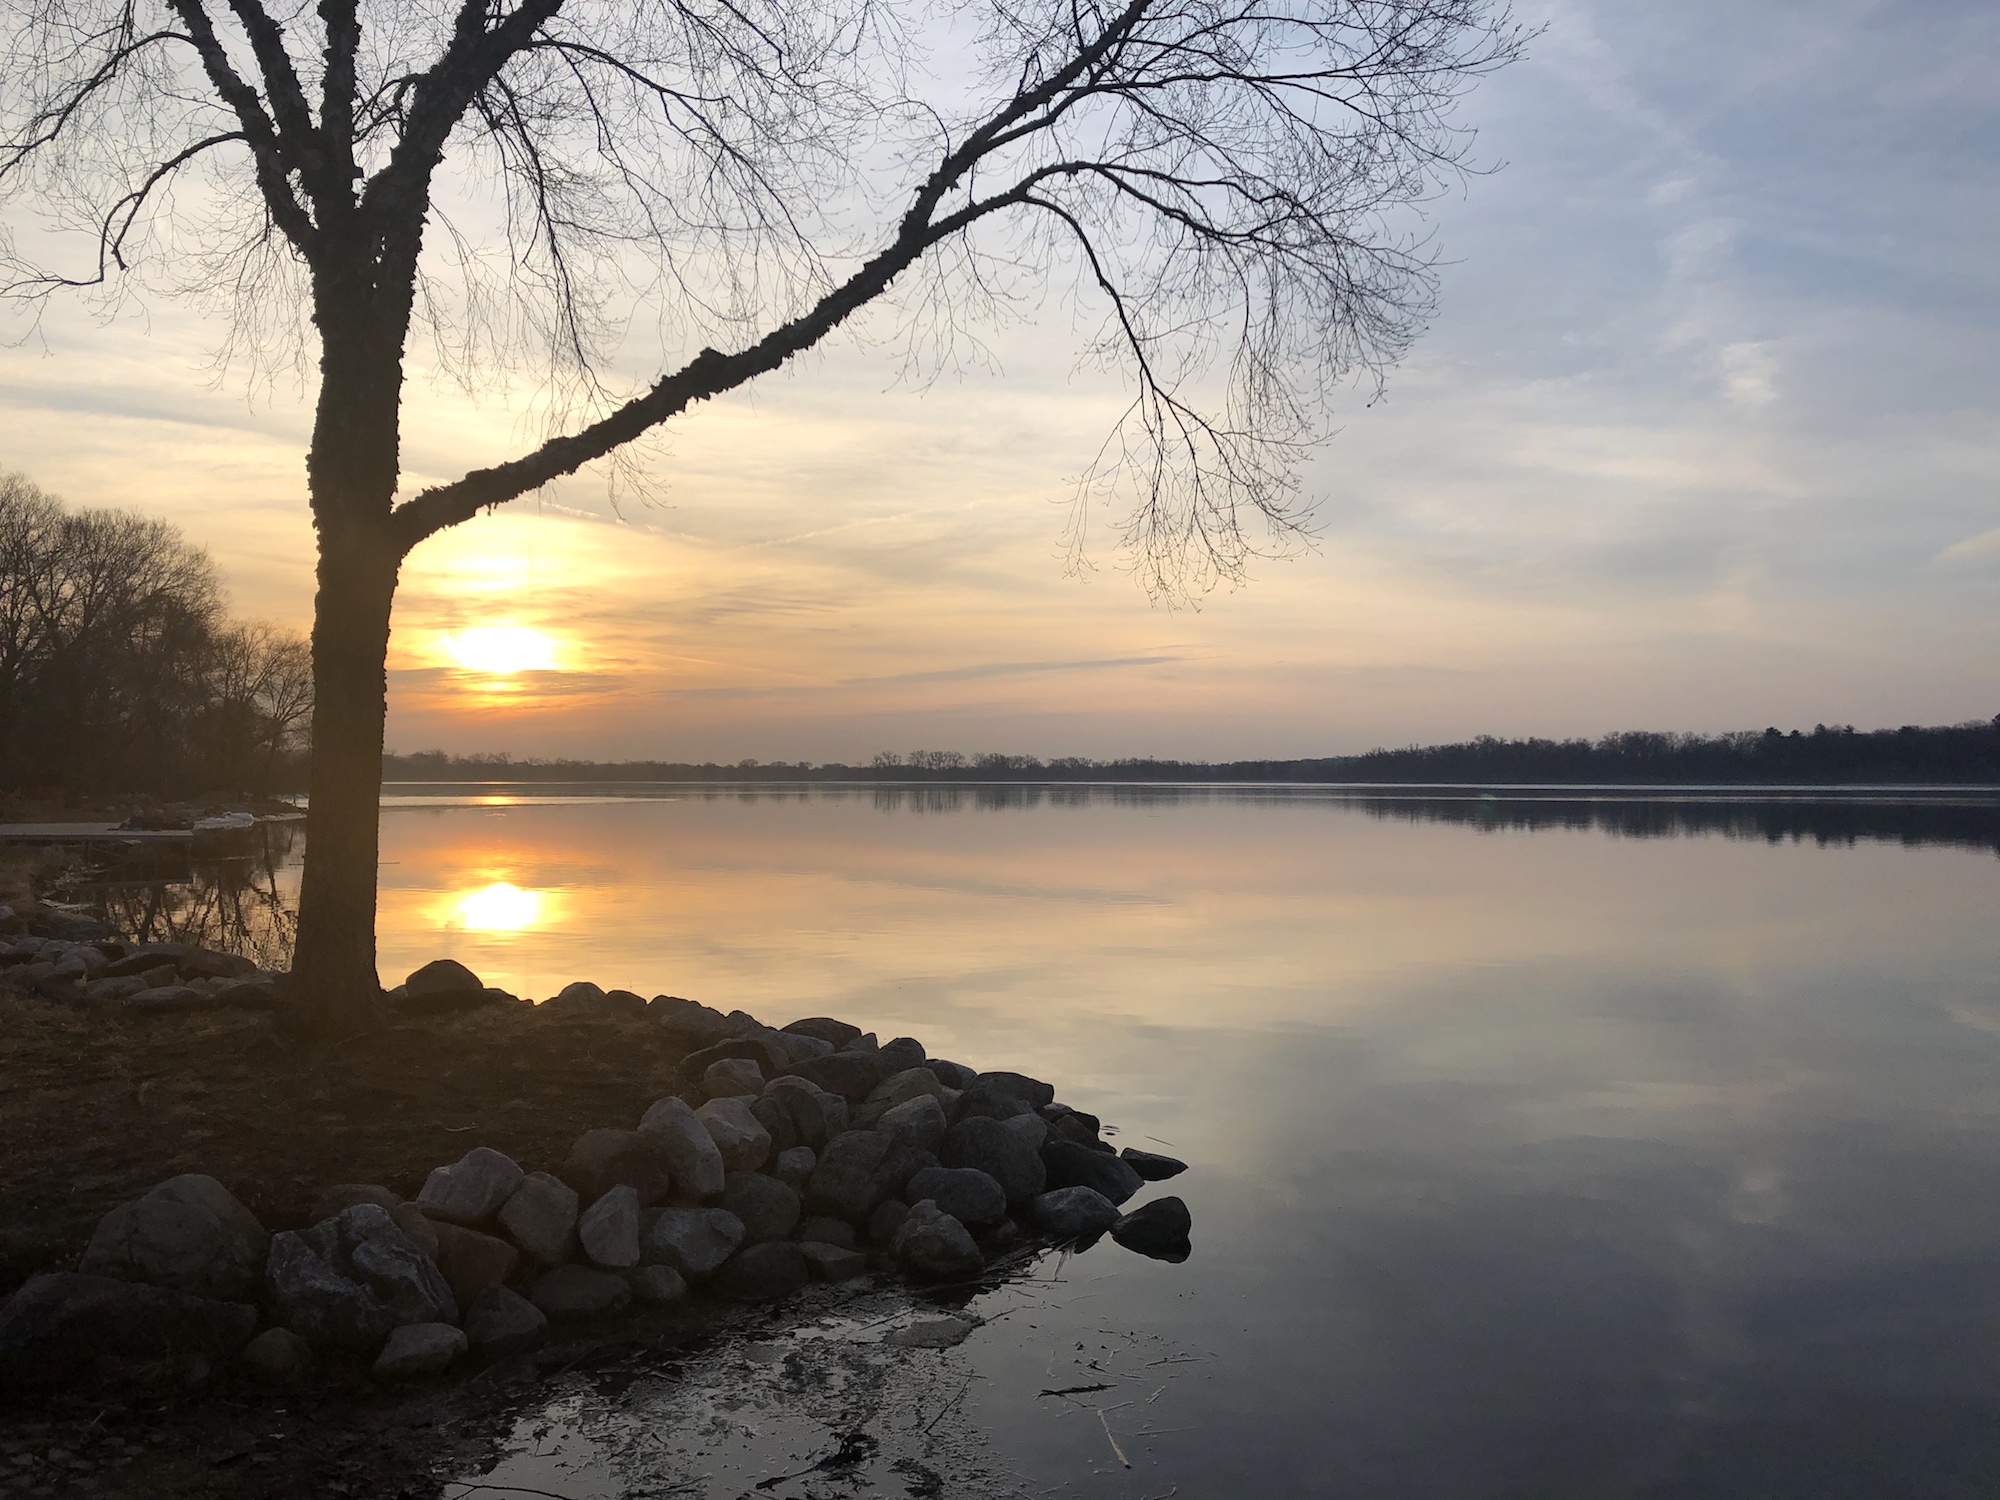 Lake Wingra on March 28, 2019.